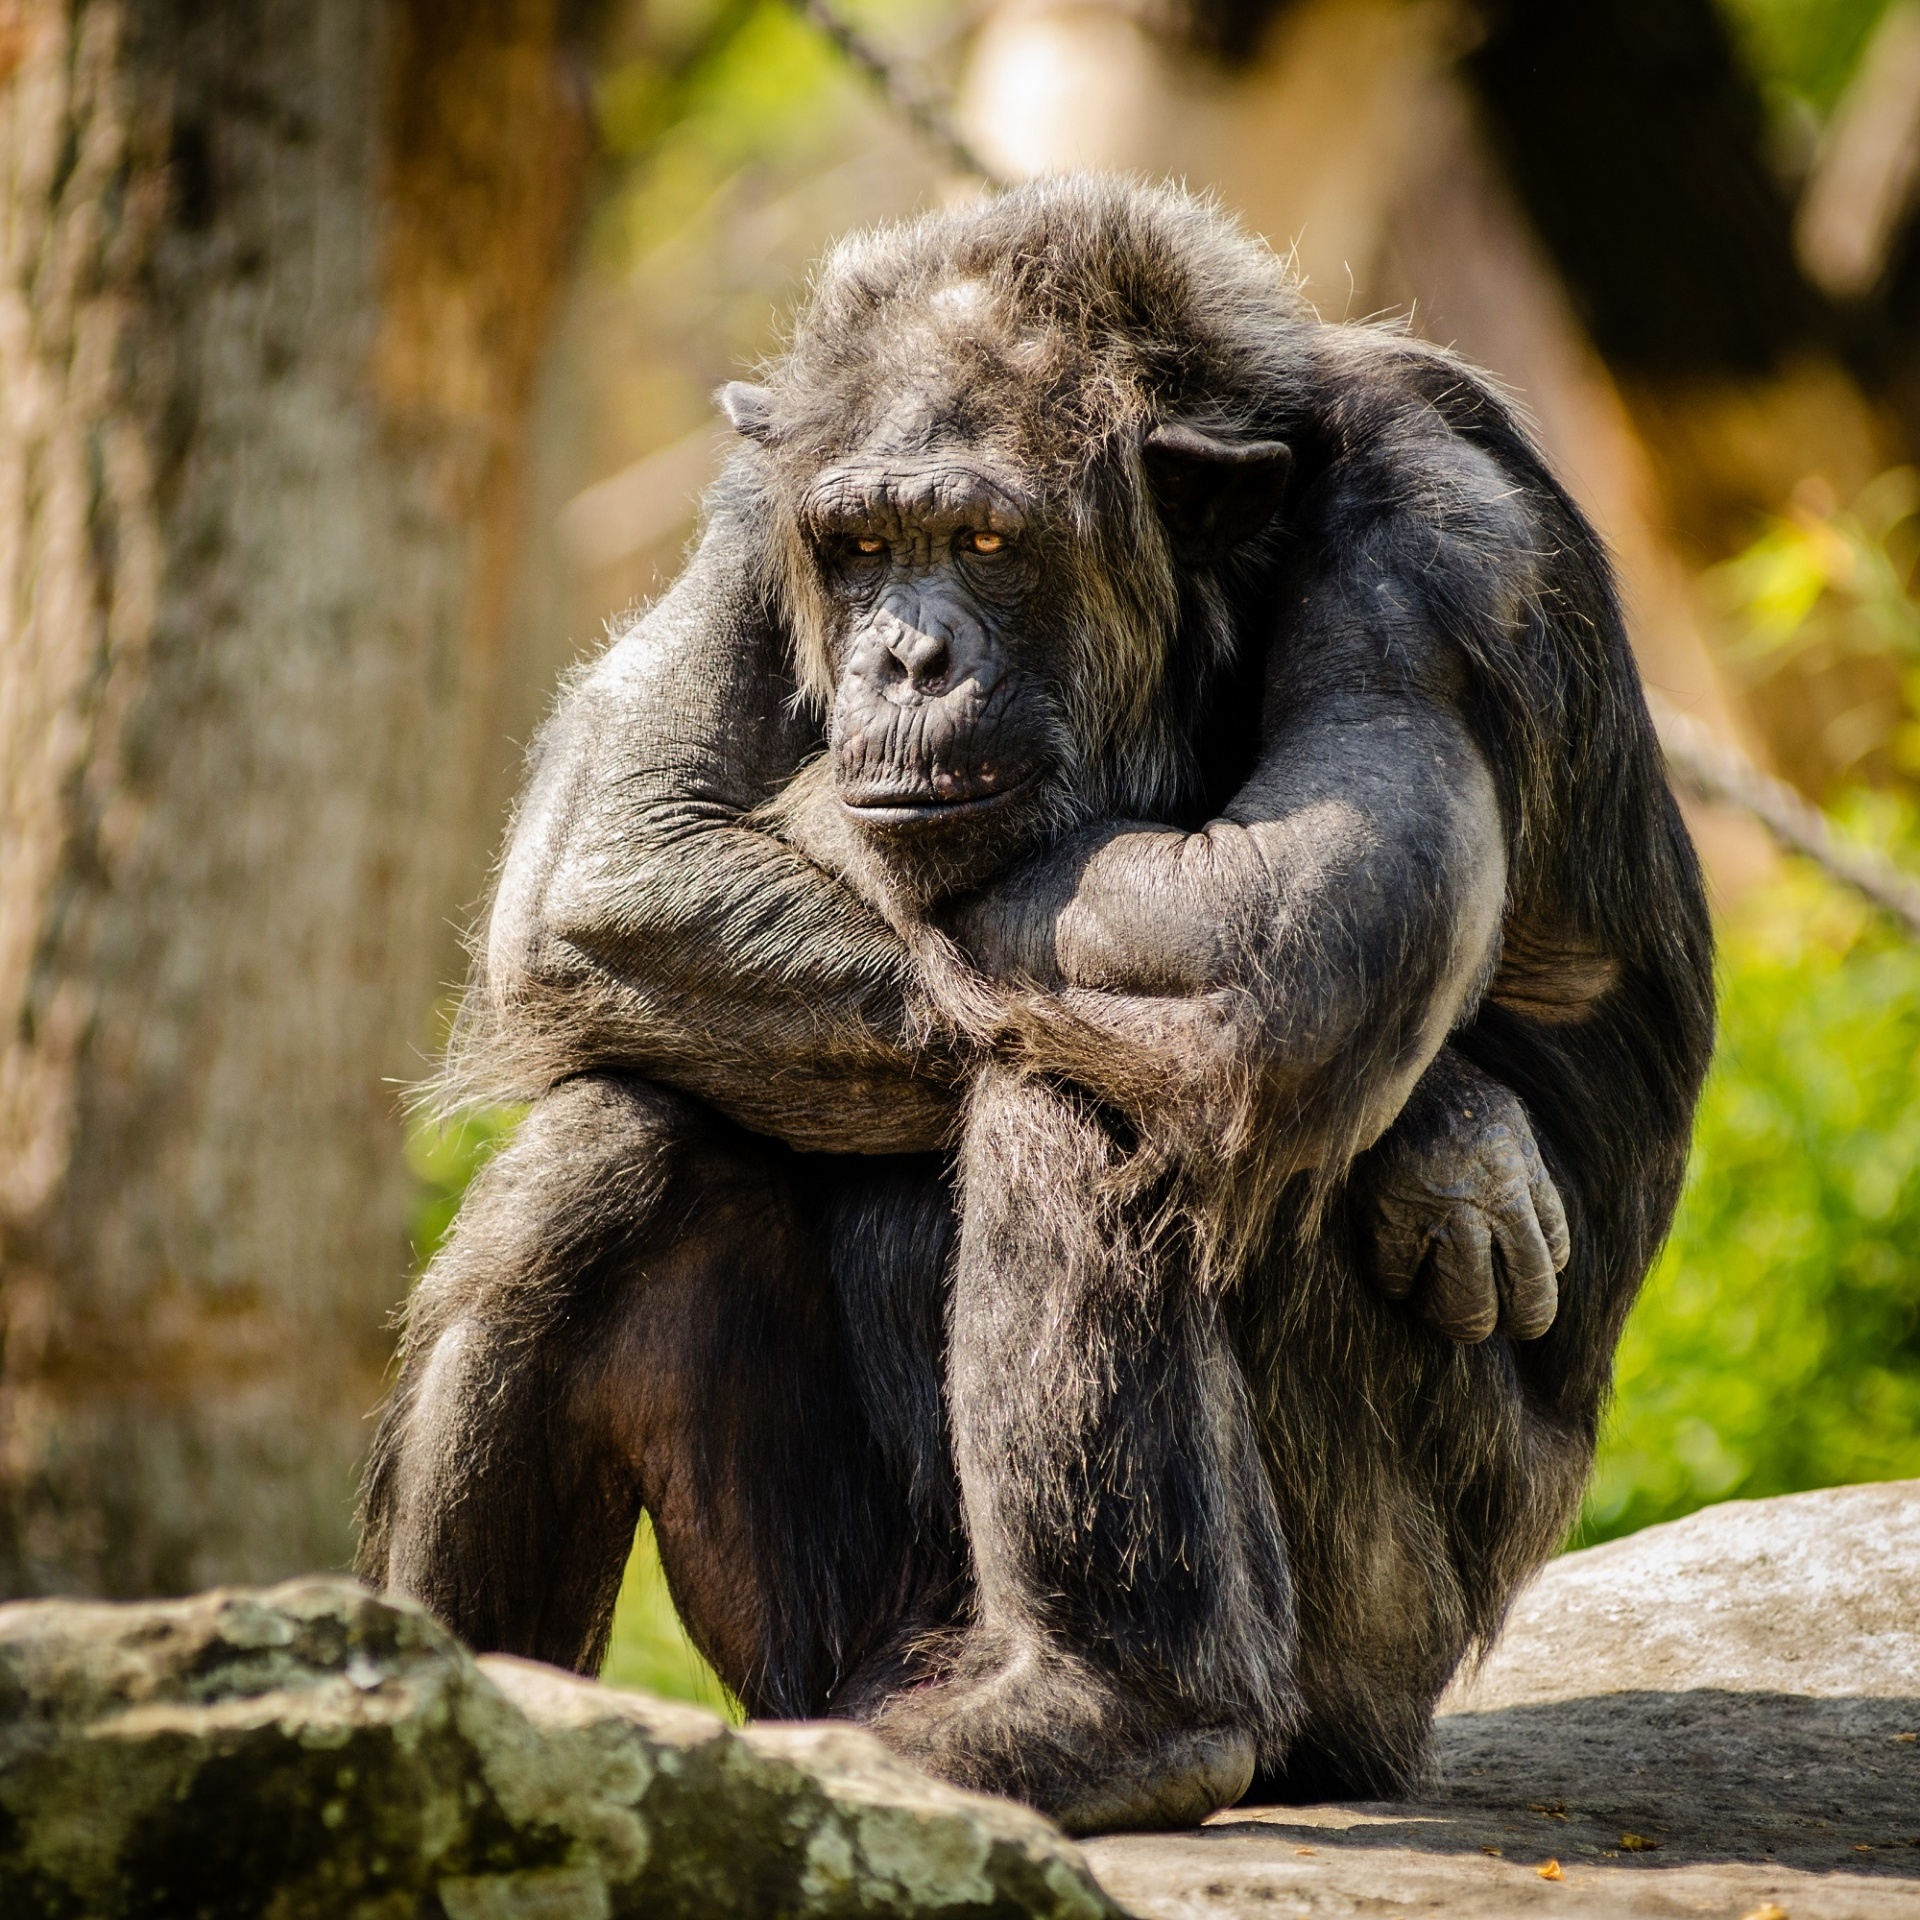 Chimpanzee sitting and looking sad